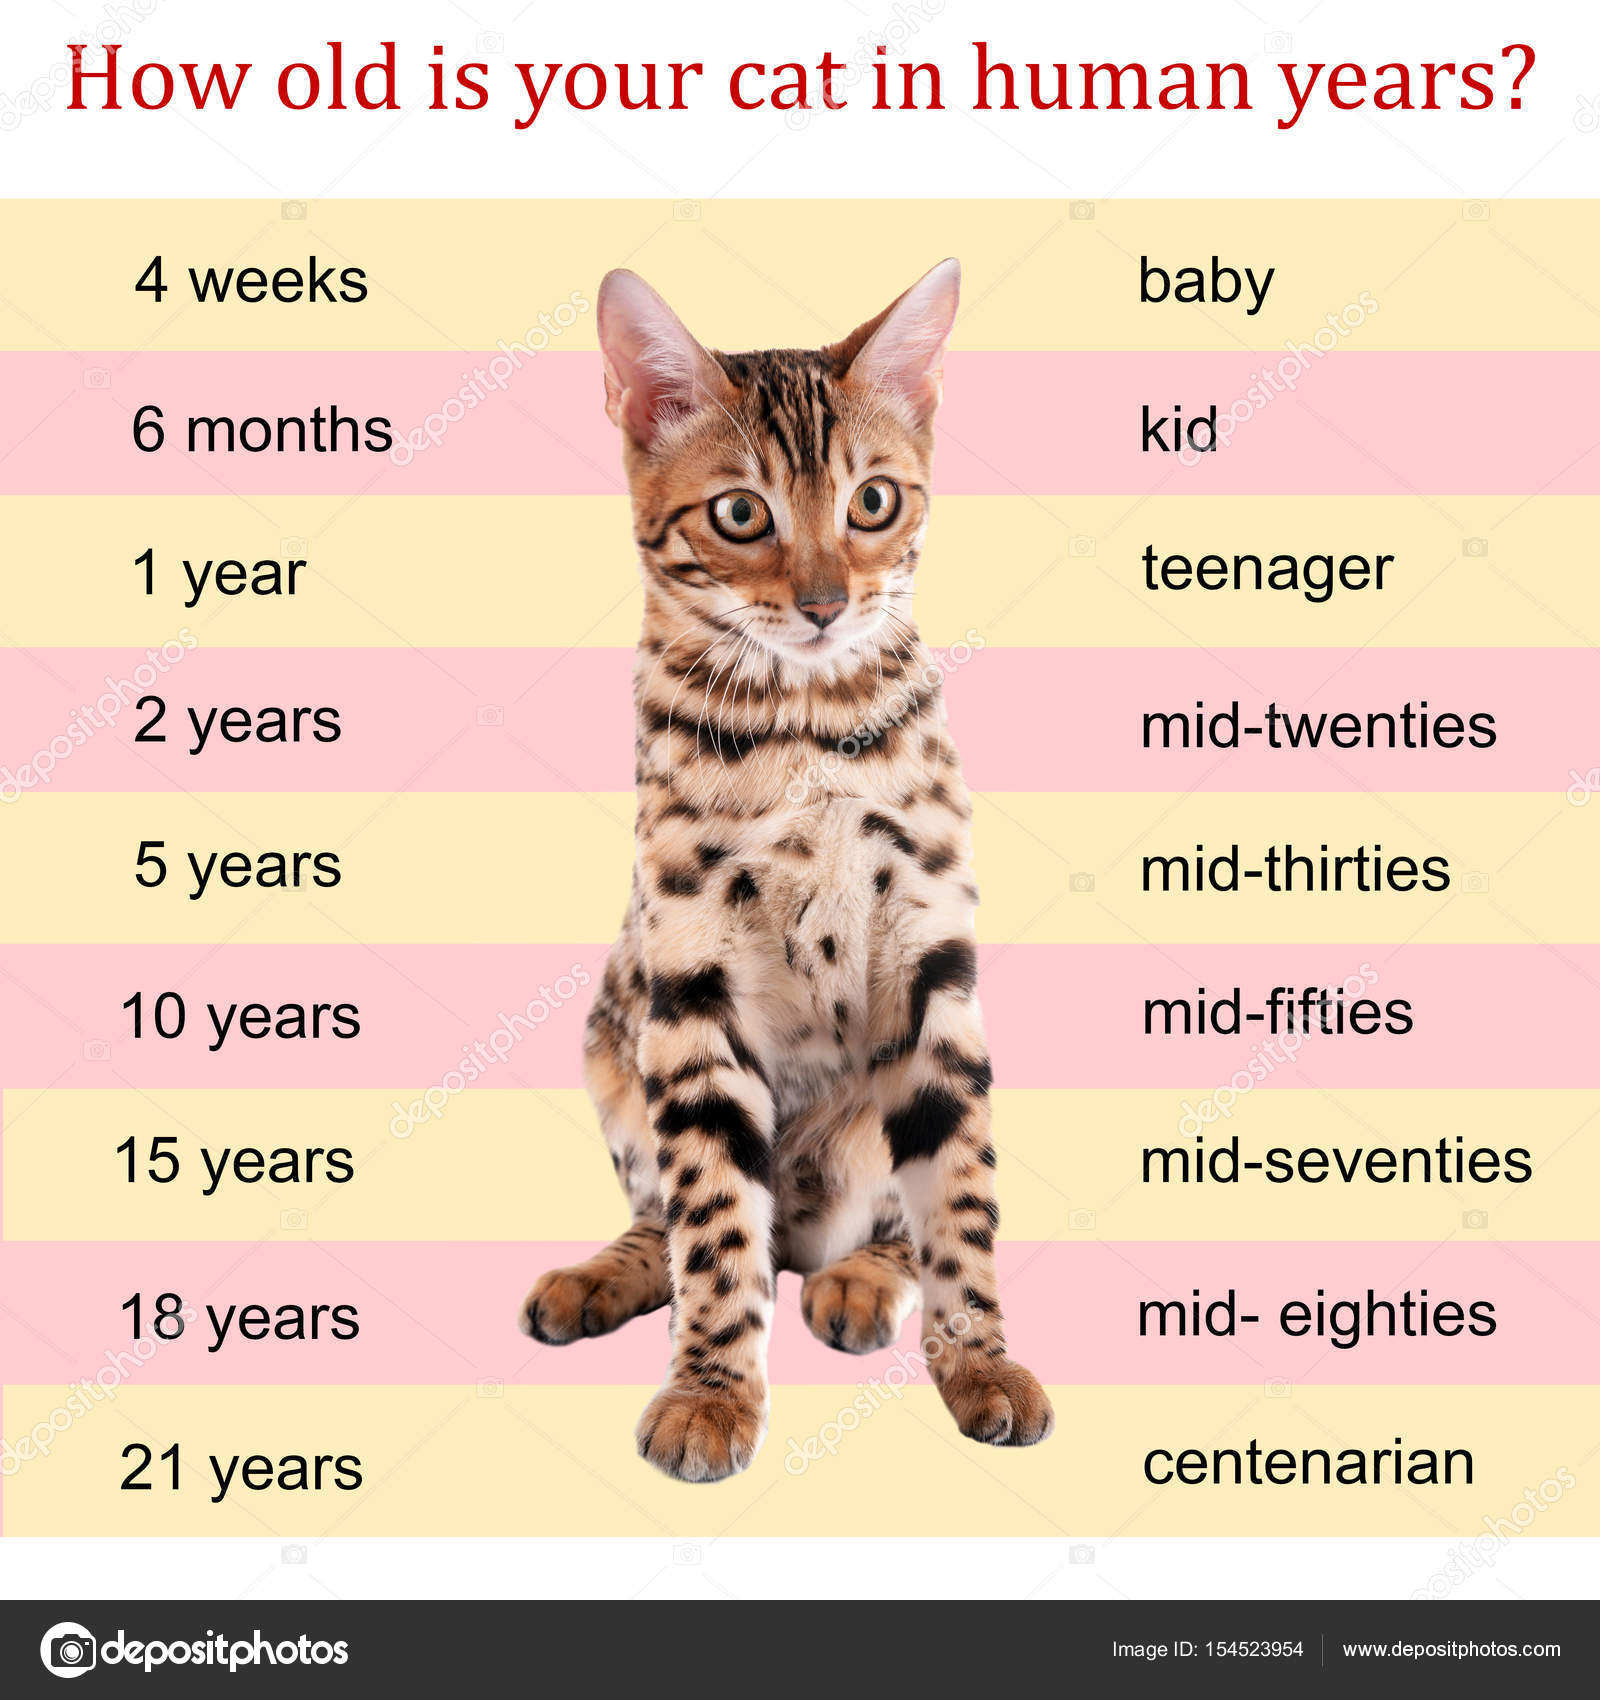 Определить возраст кота по фото